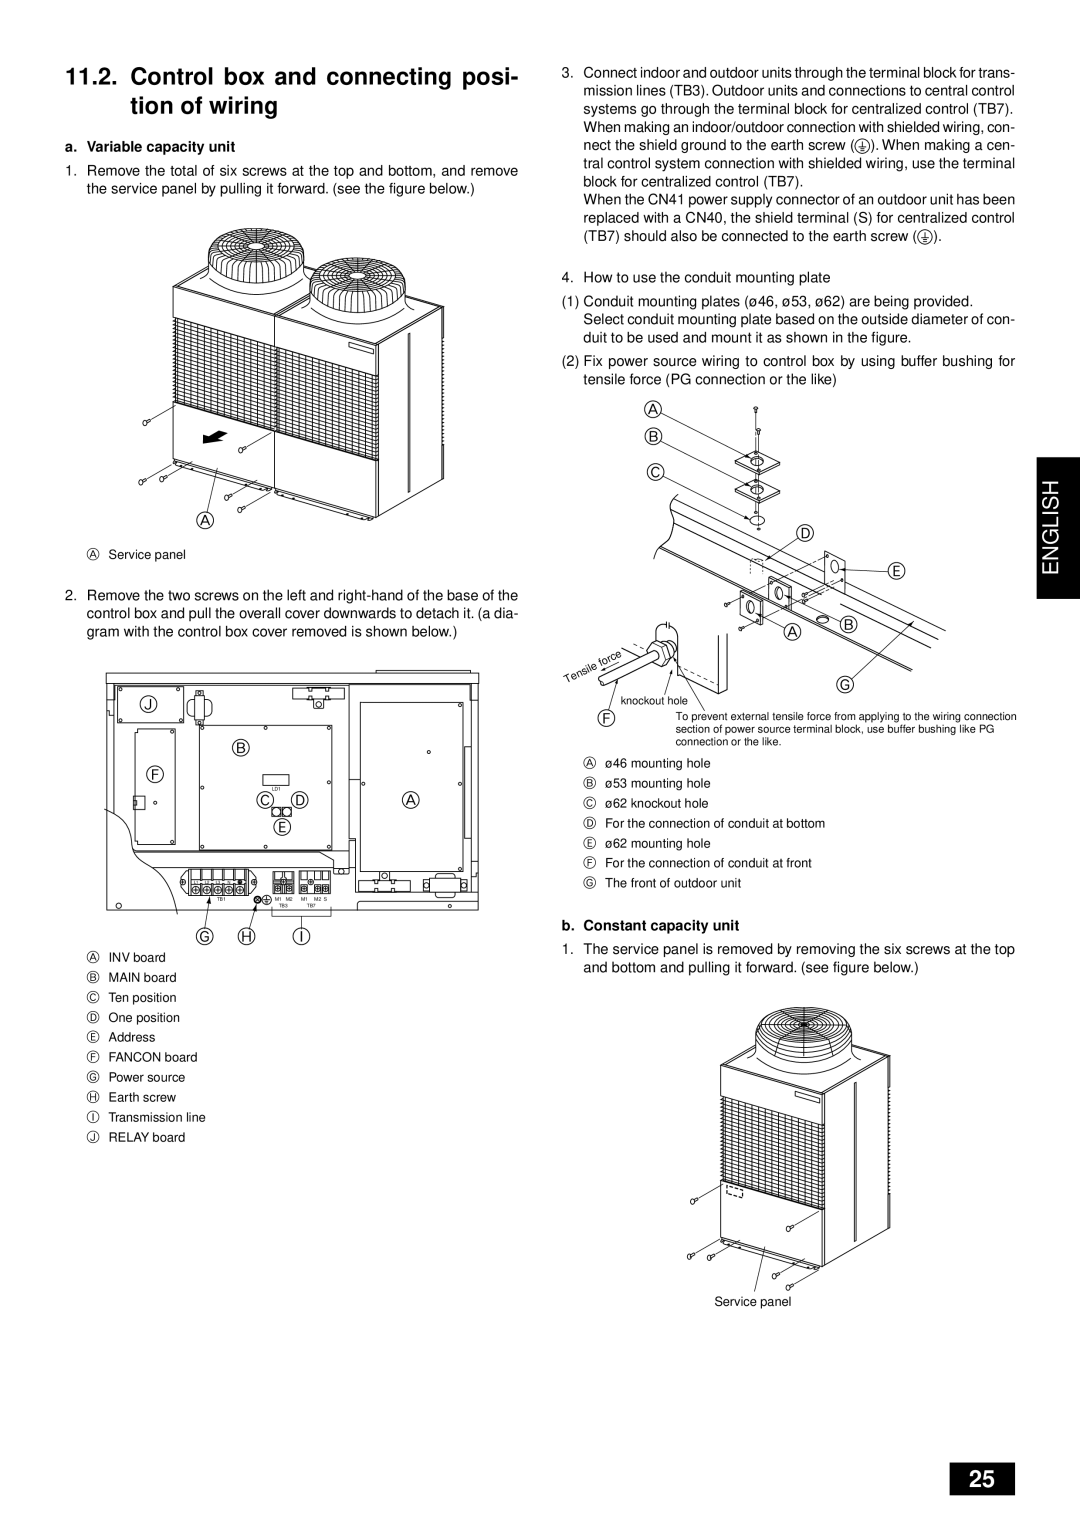 Mitsubishi Electronics PUHY-YMC Control box and connecting posi- tion of wiring, J B F, C D A E, A B C D E A B G, English 